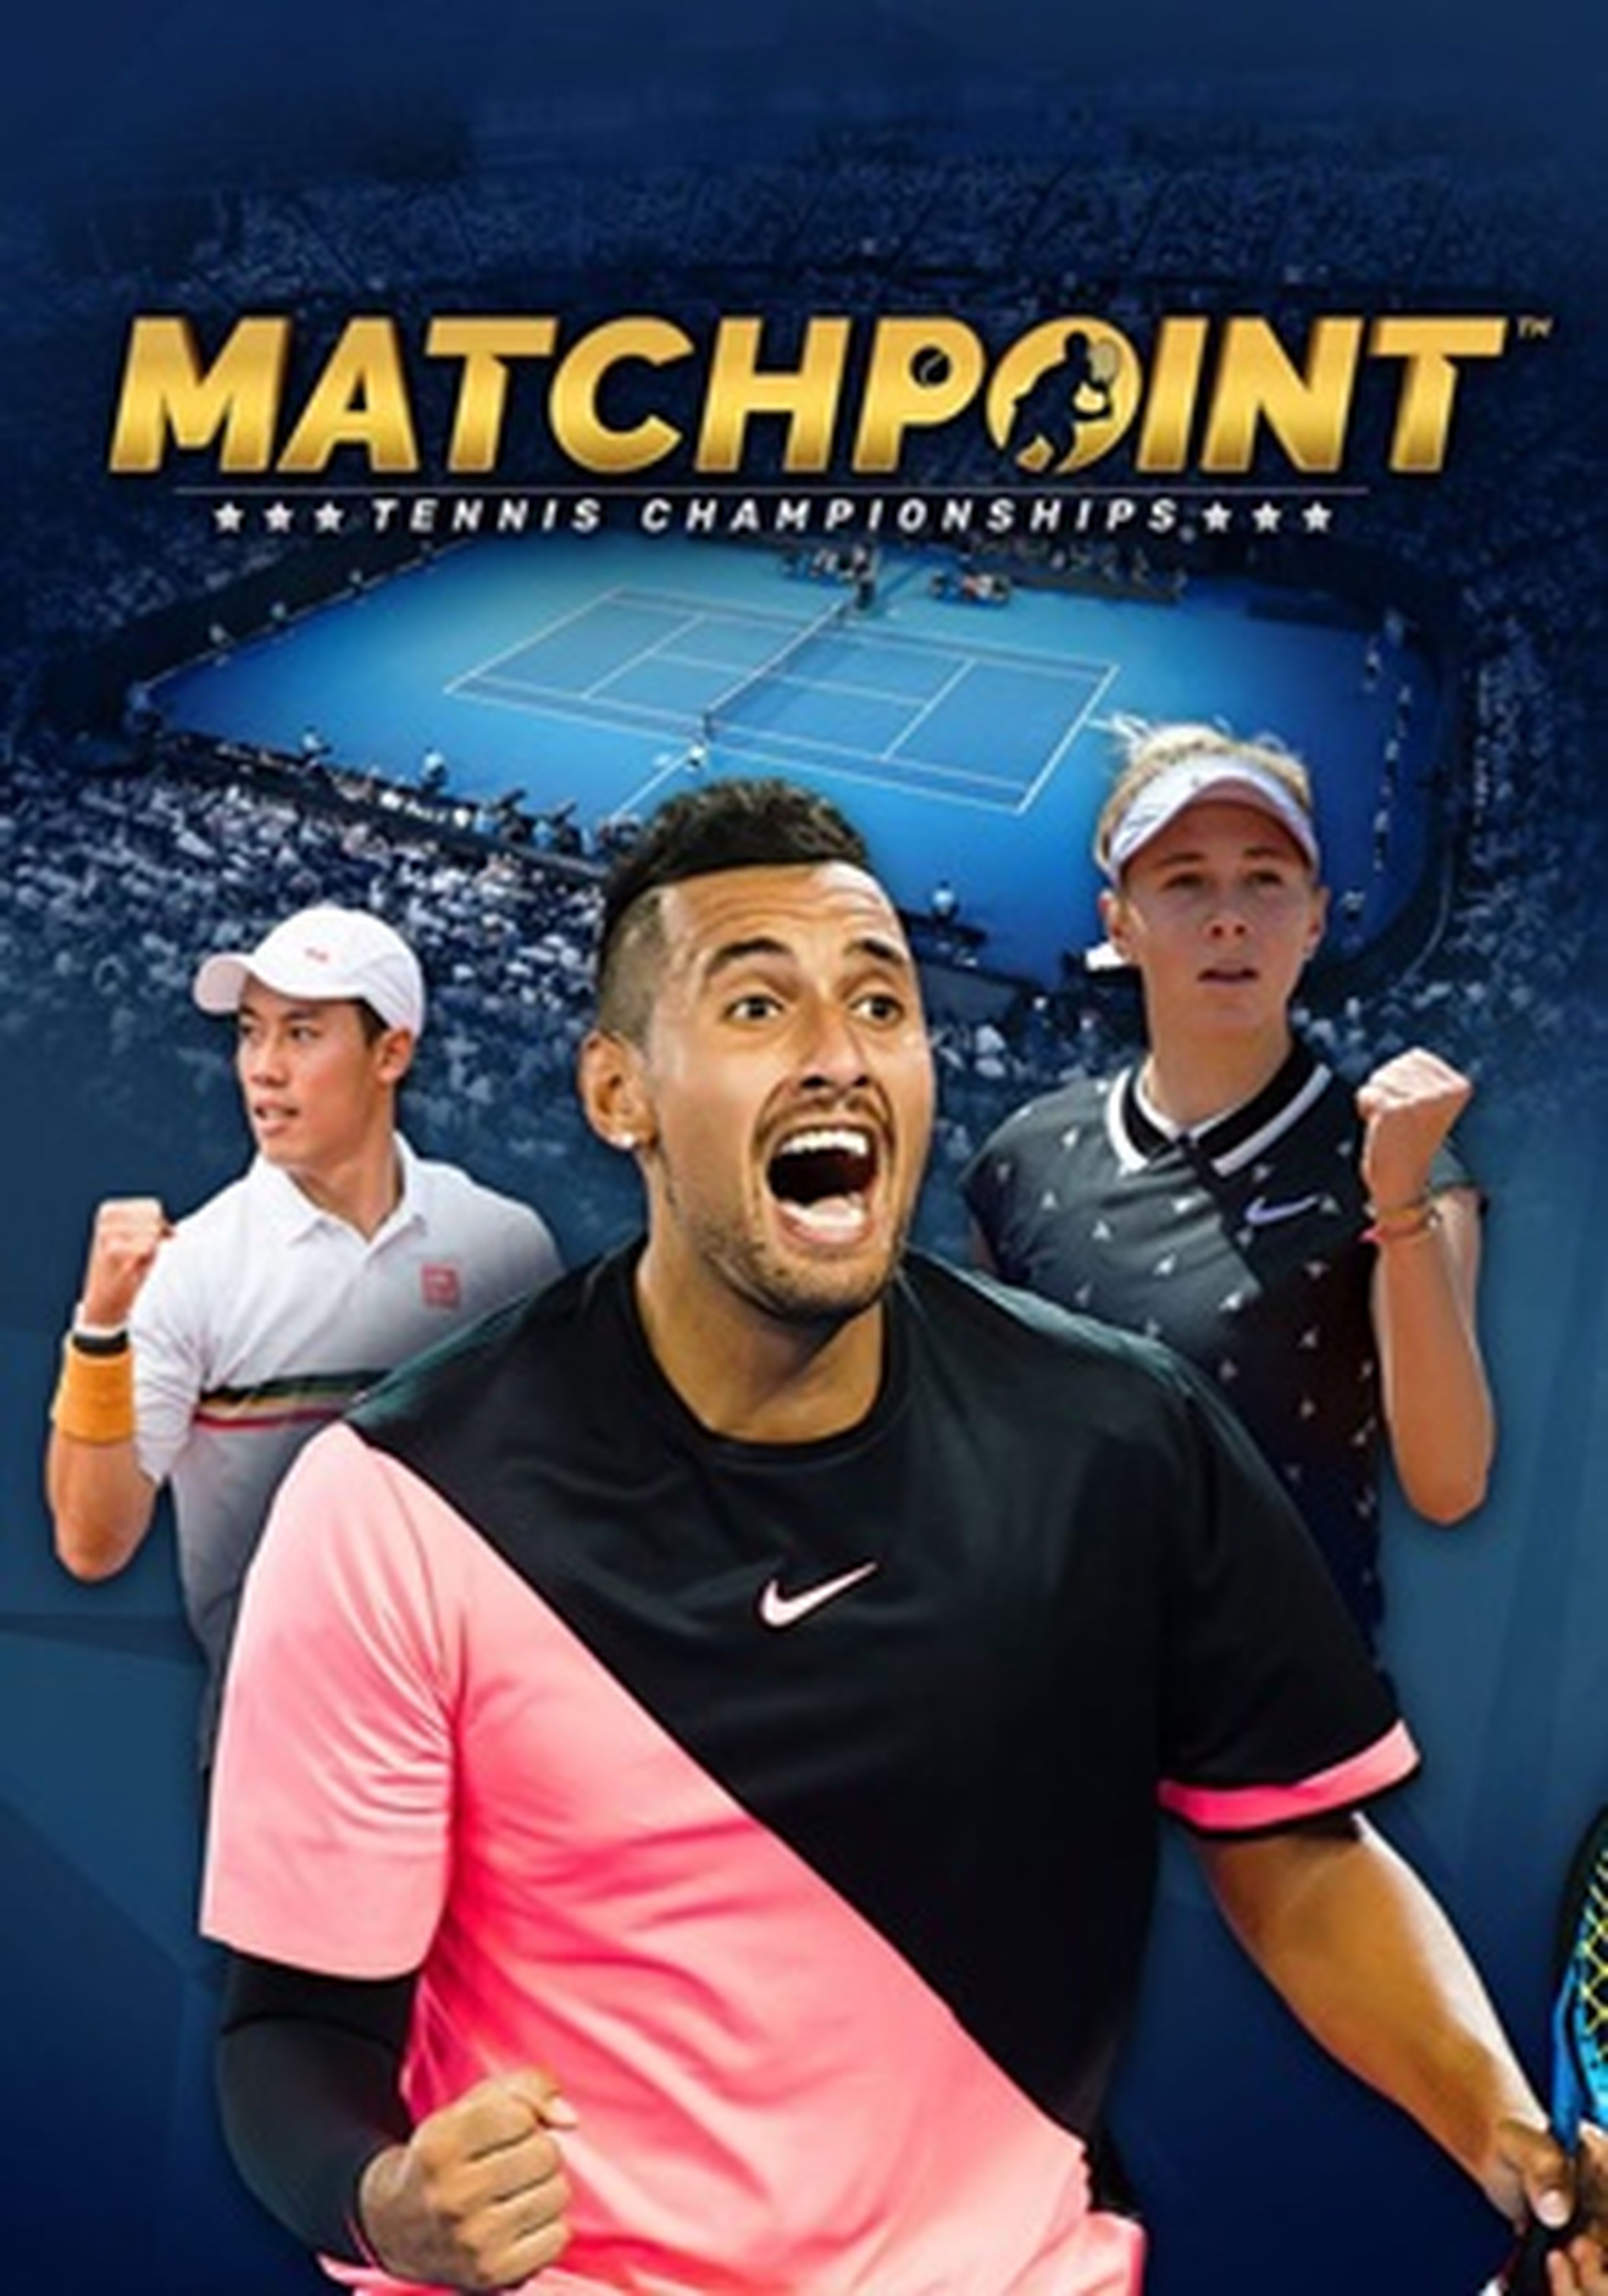 Matchpoint Tennis Championships cartel